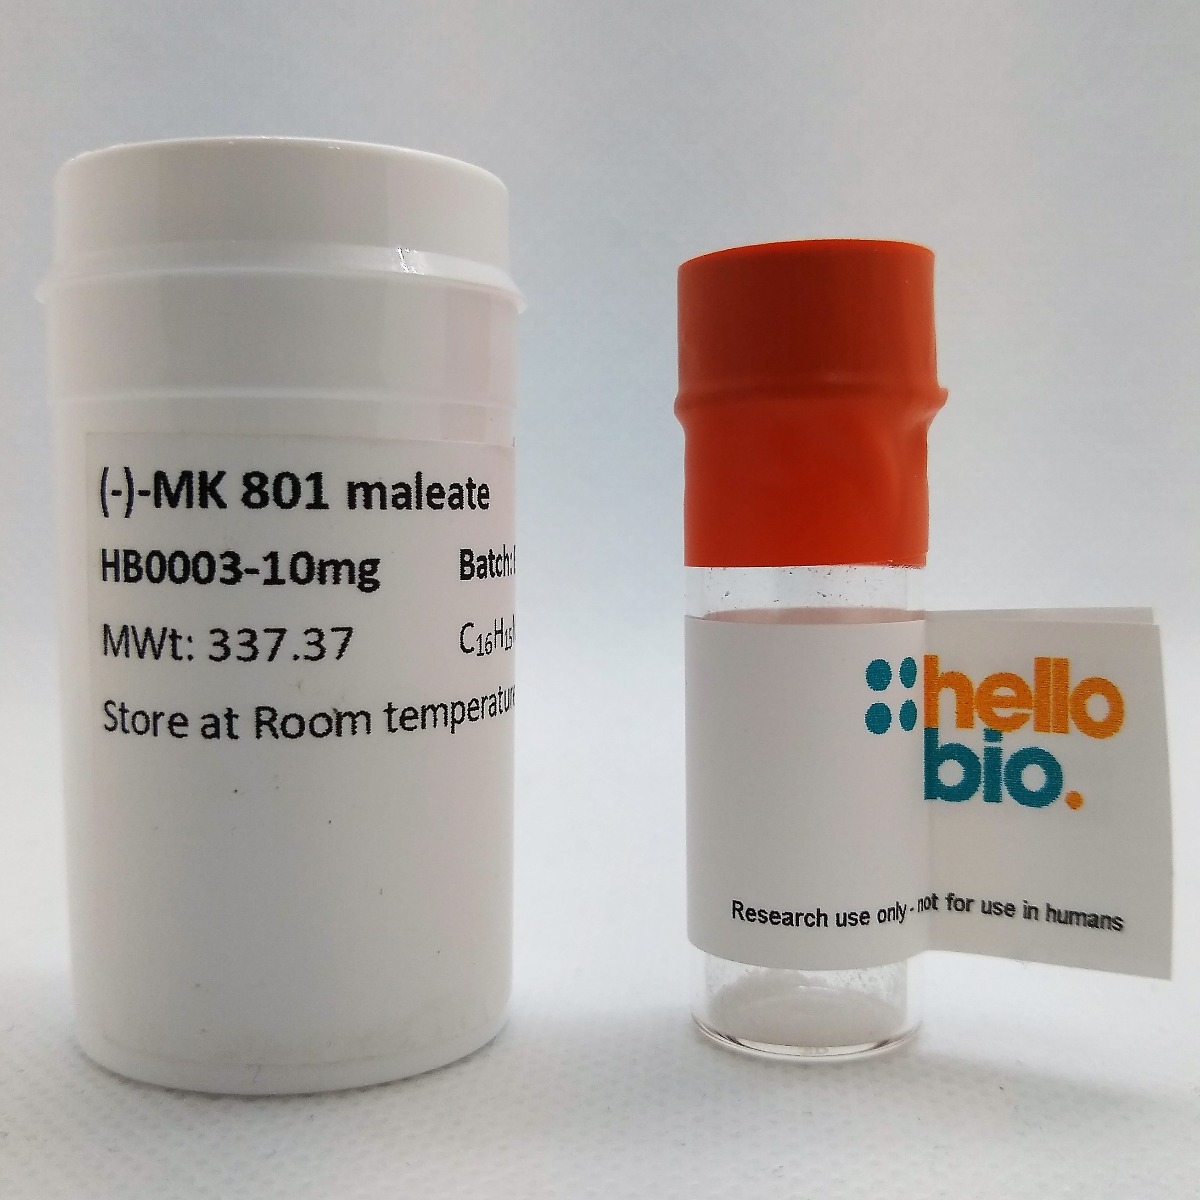 (-)-MK 801 maleate product vial image | Hello Bio